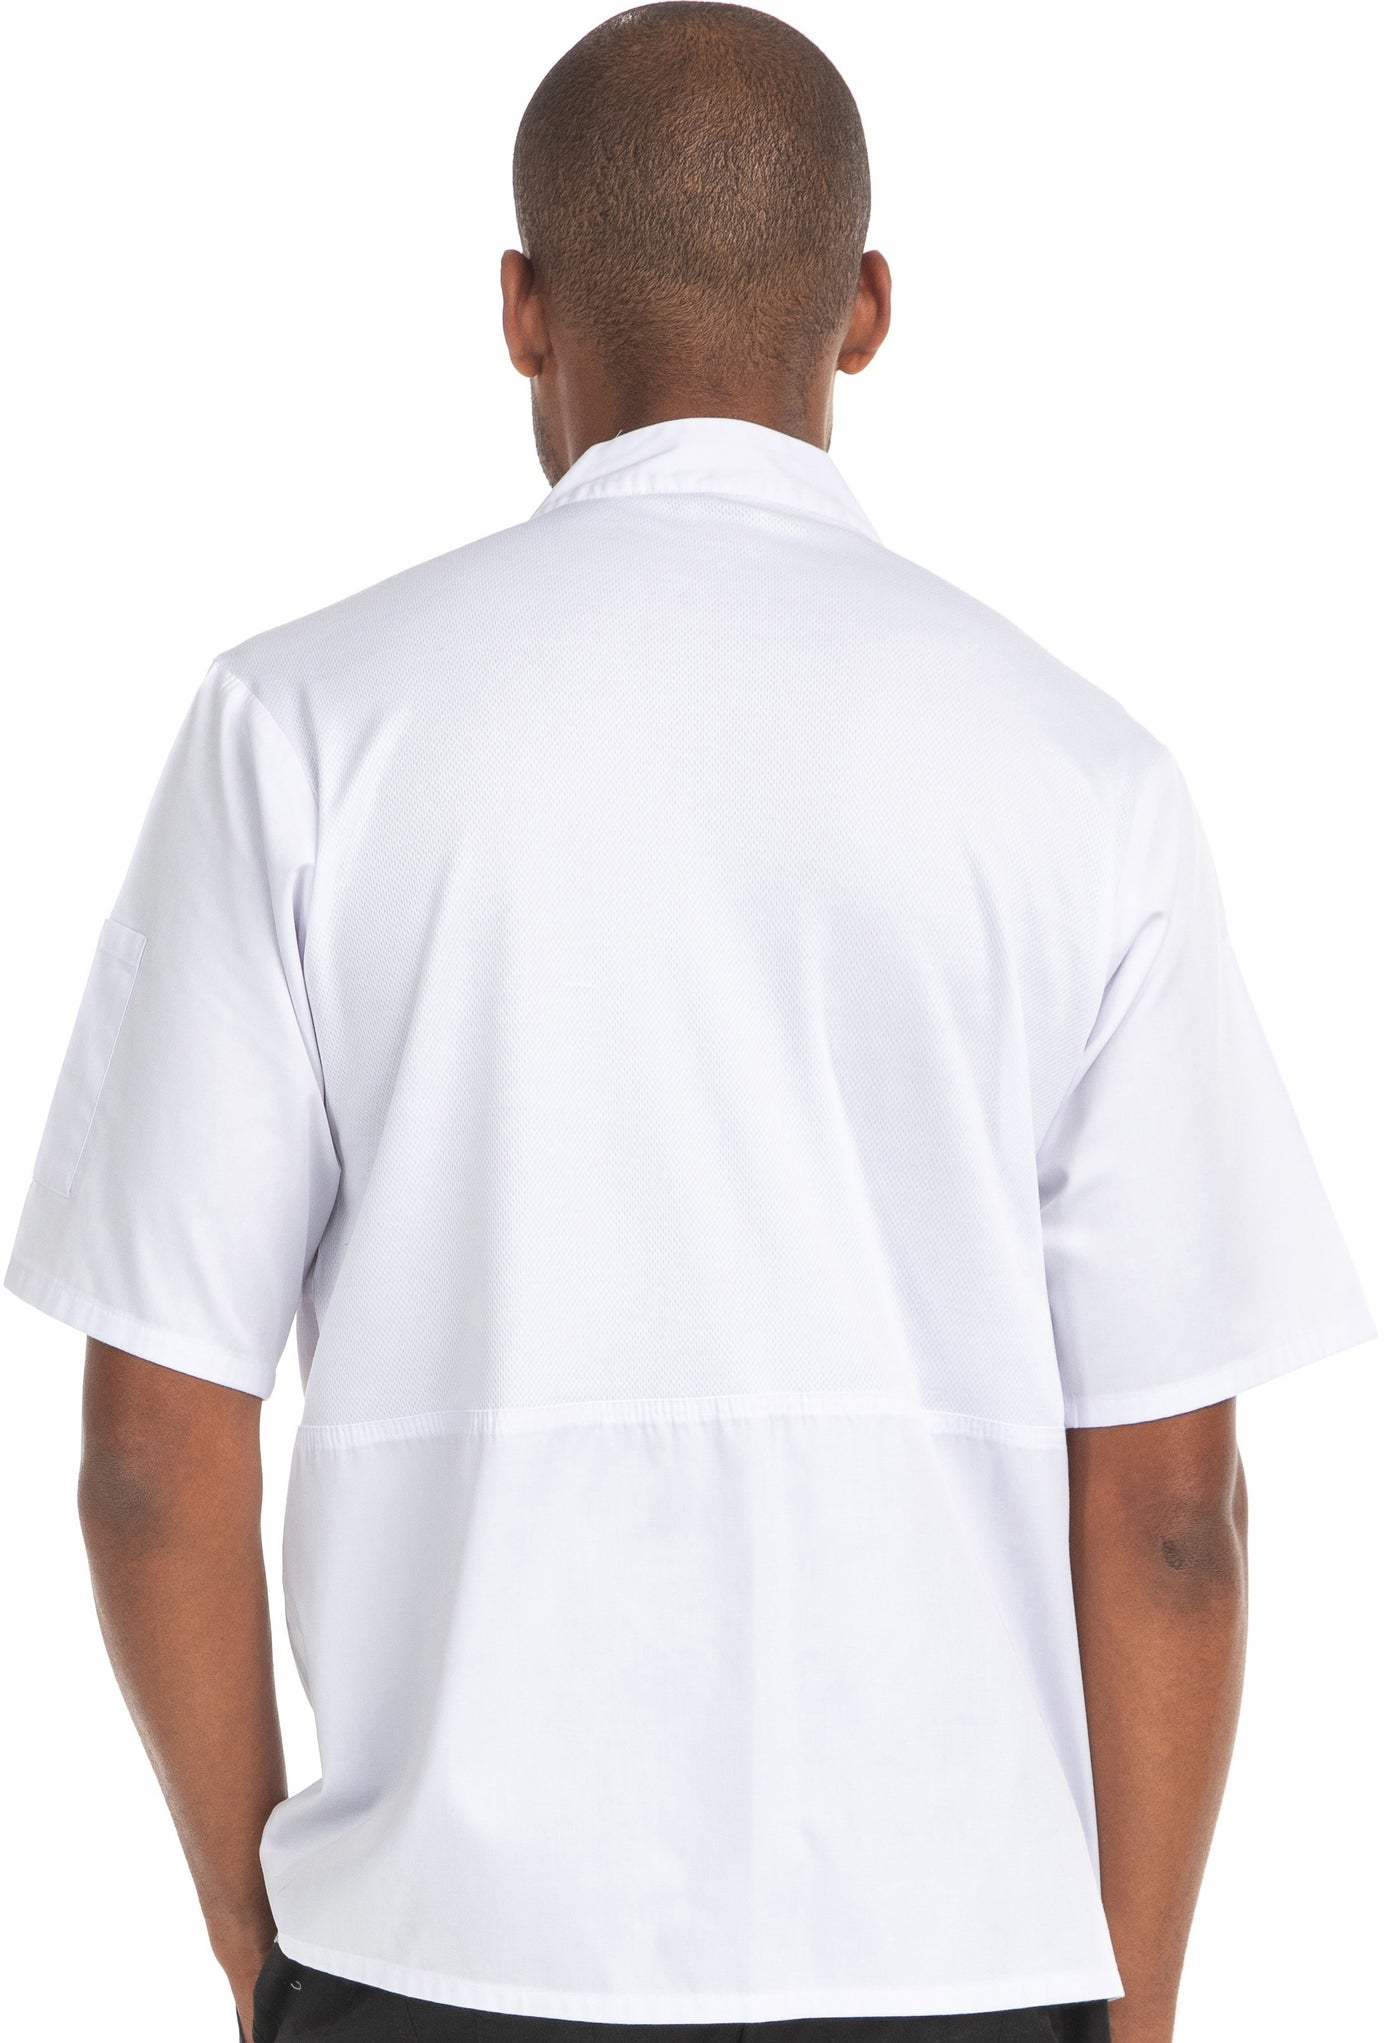 Parker - Unisex Short Sleeve Mesh Back Chef Coat By MediChic XS-2XL / White